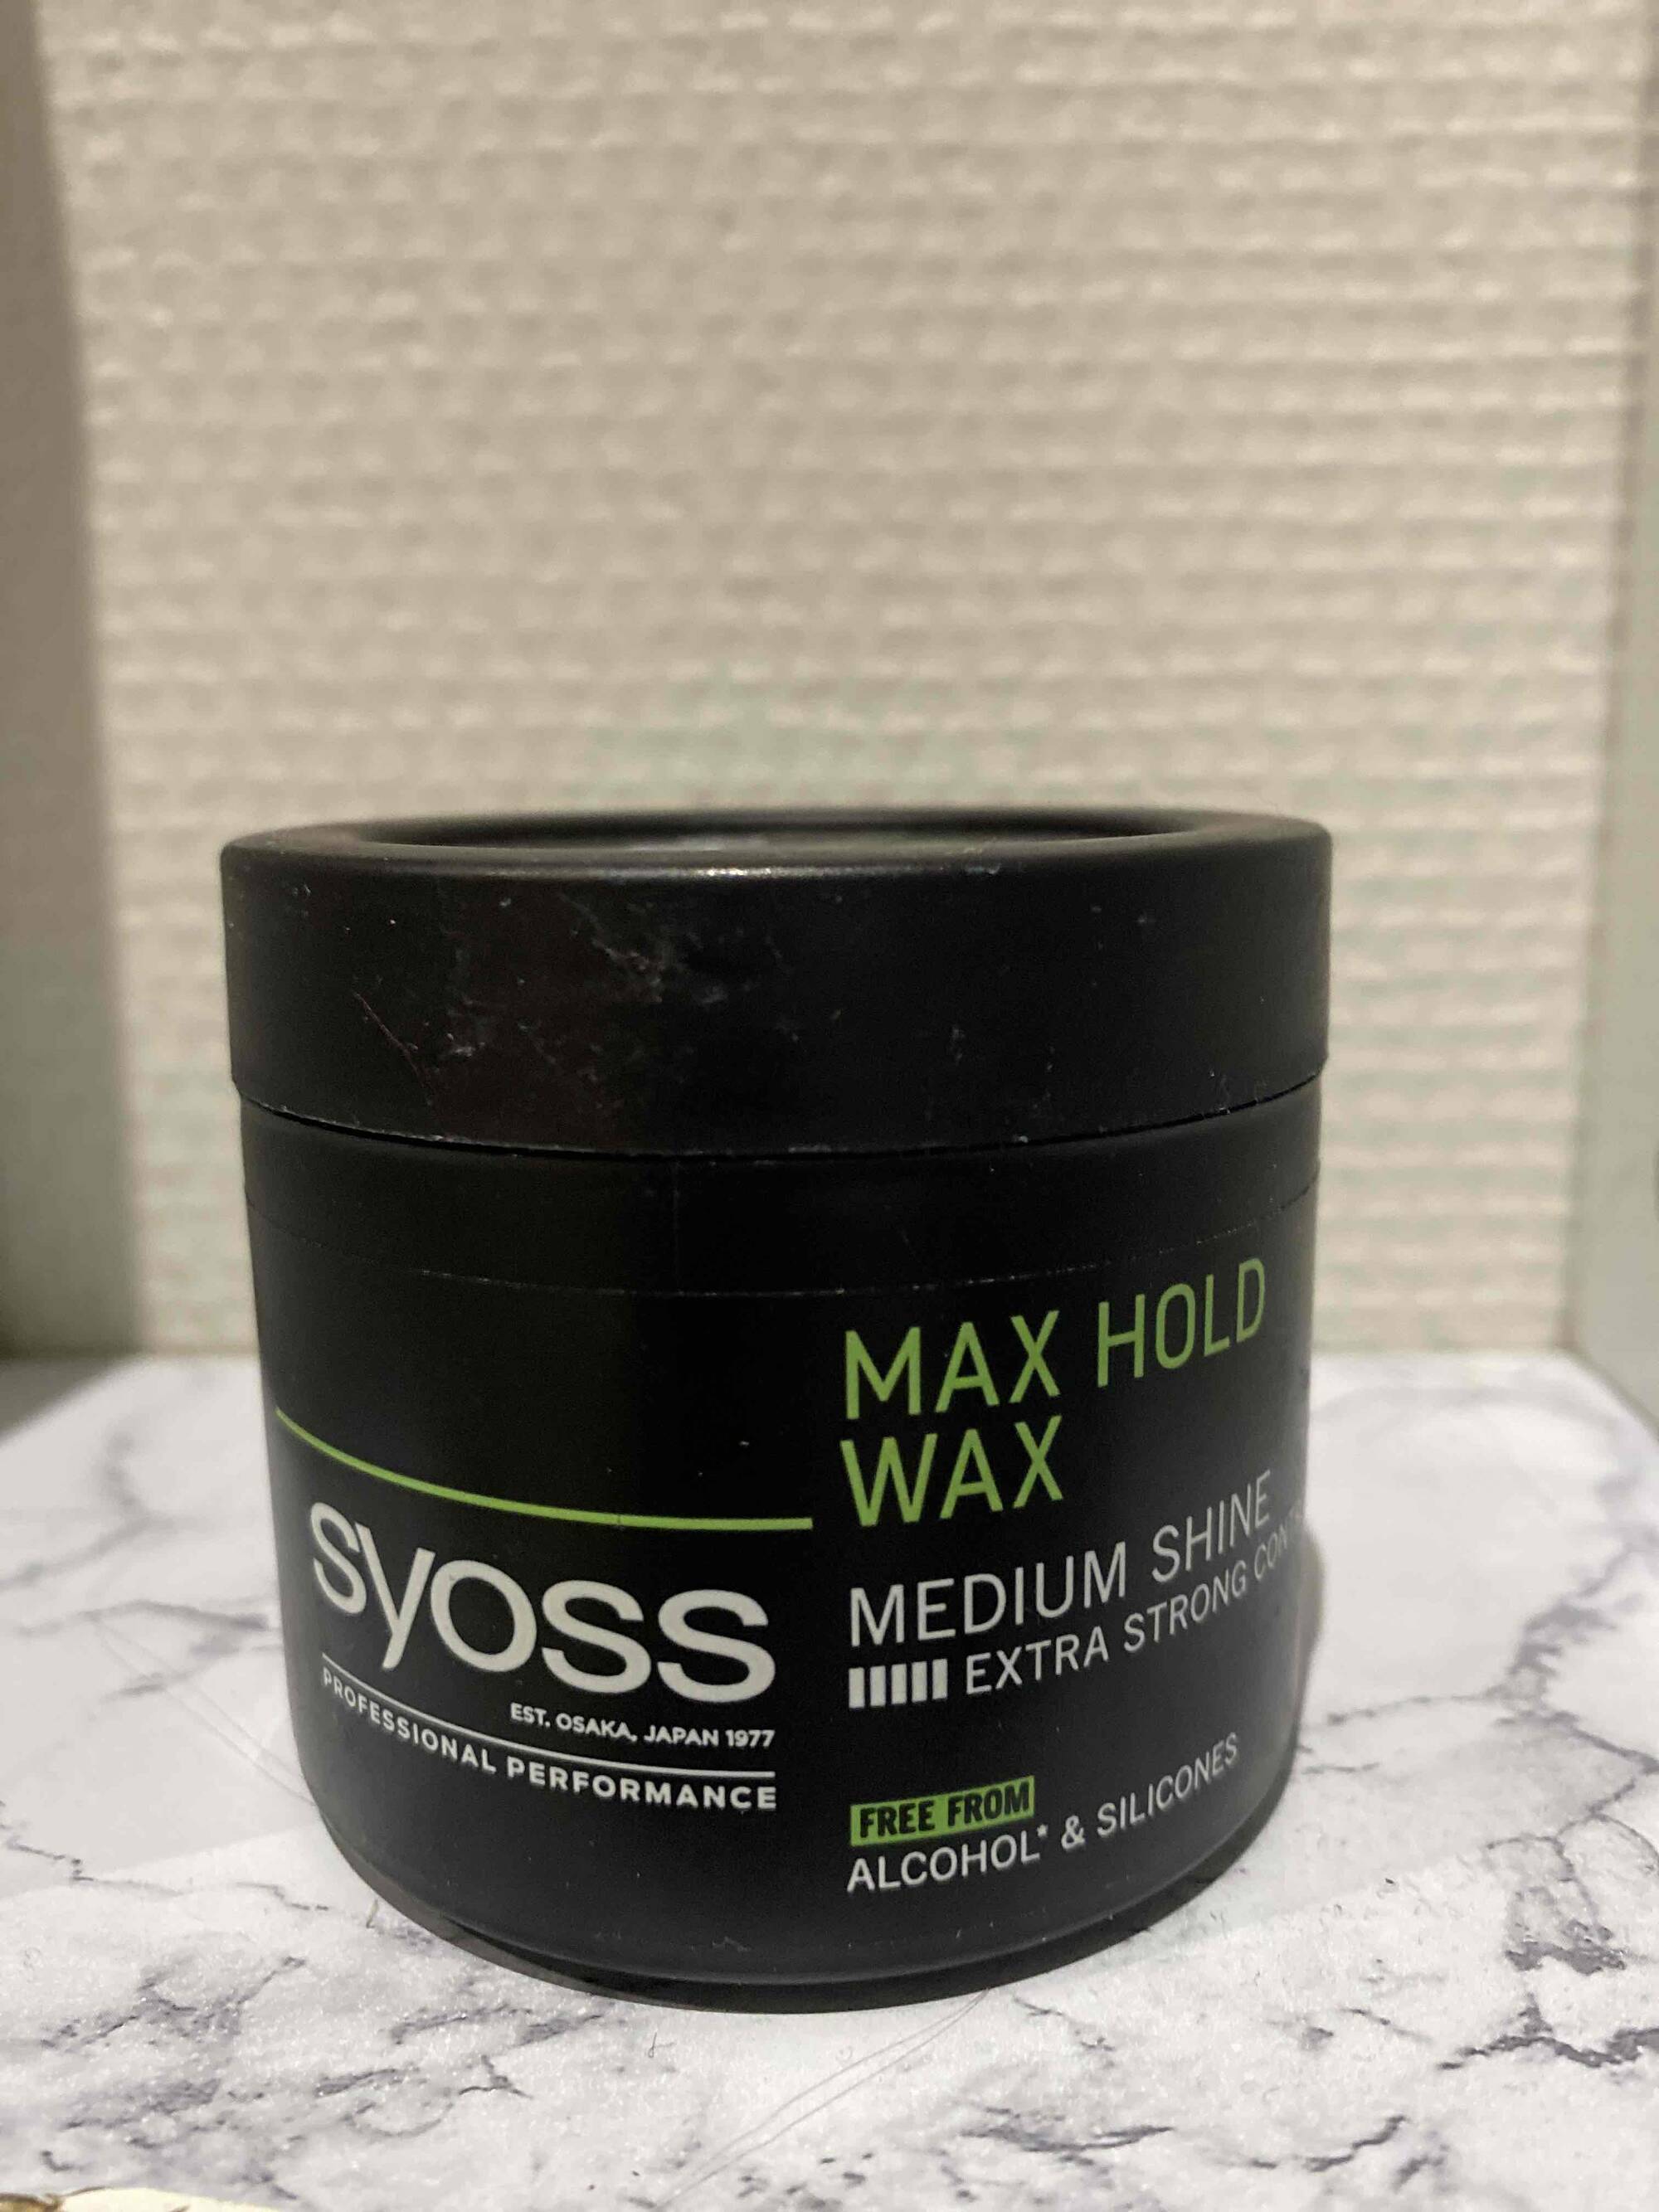 SYOSS - Max hold wax